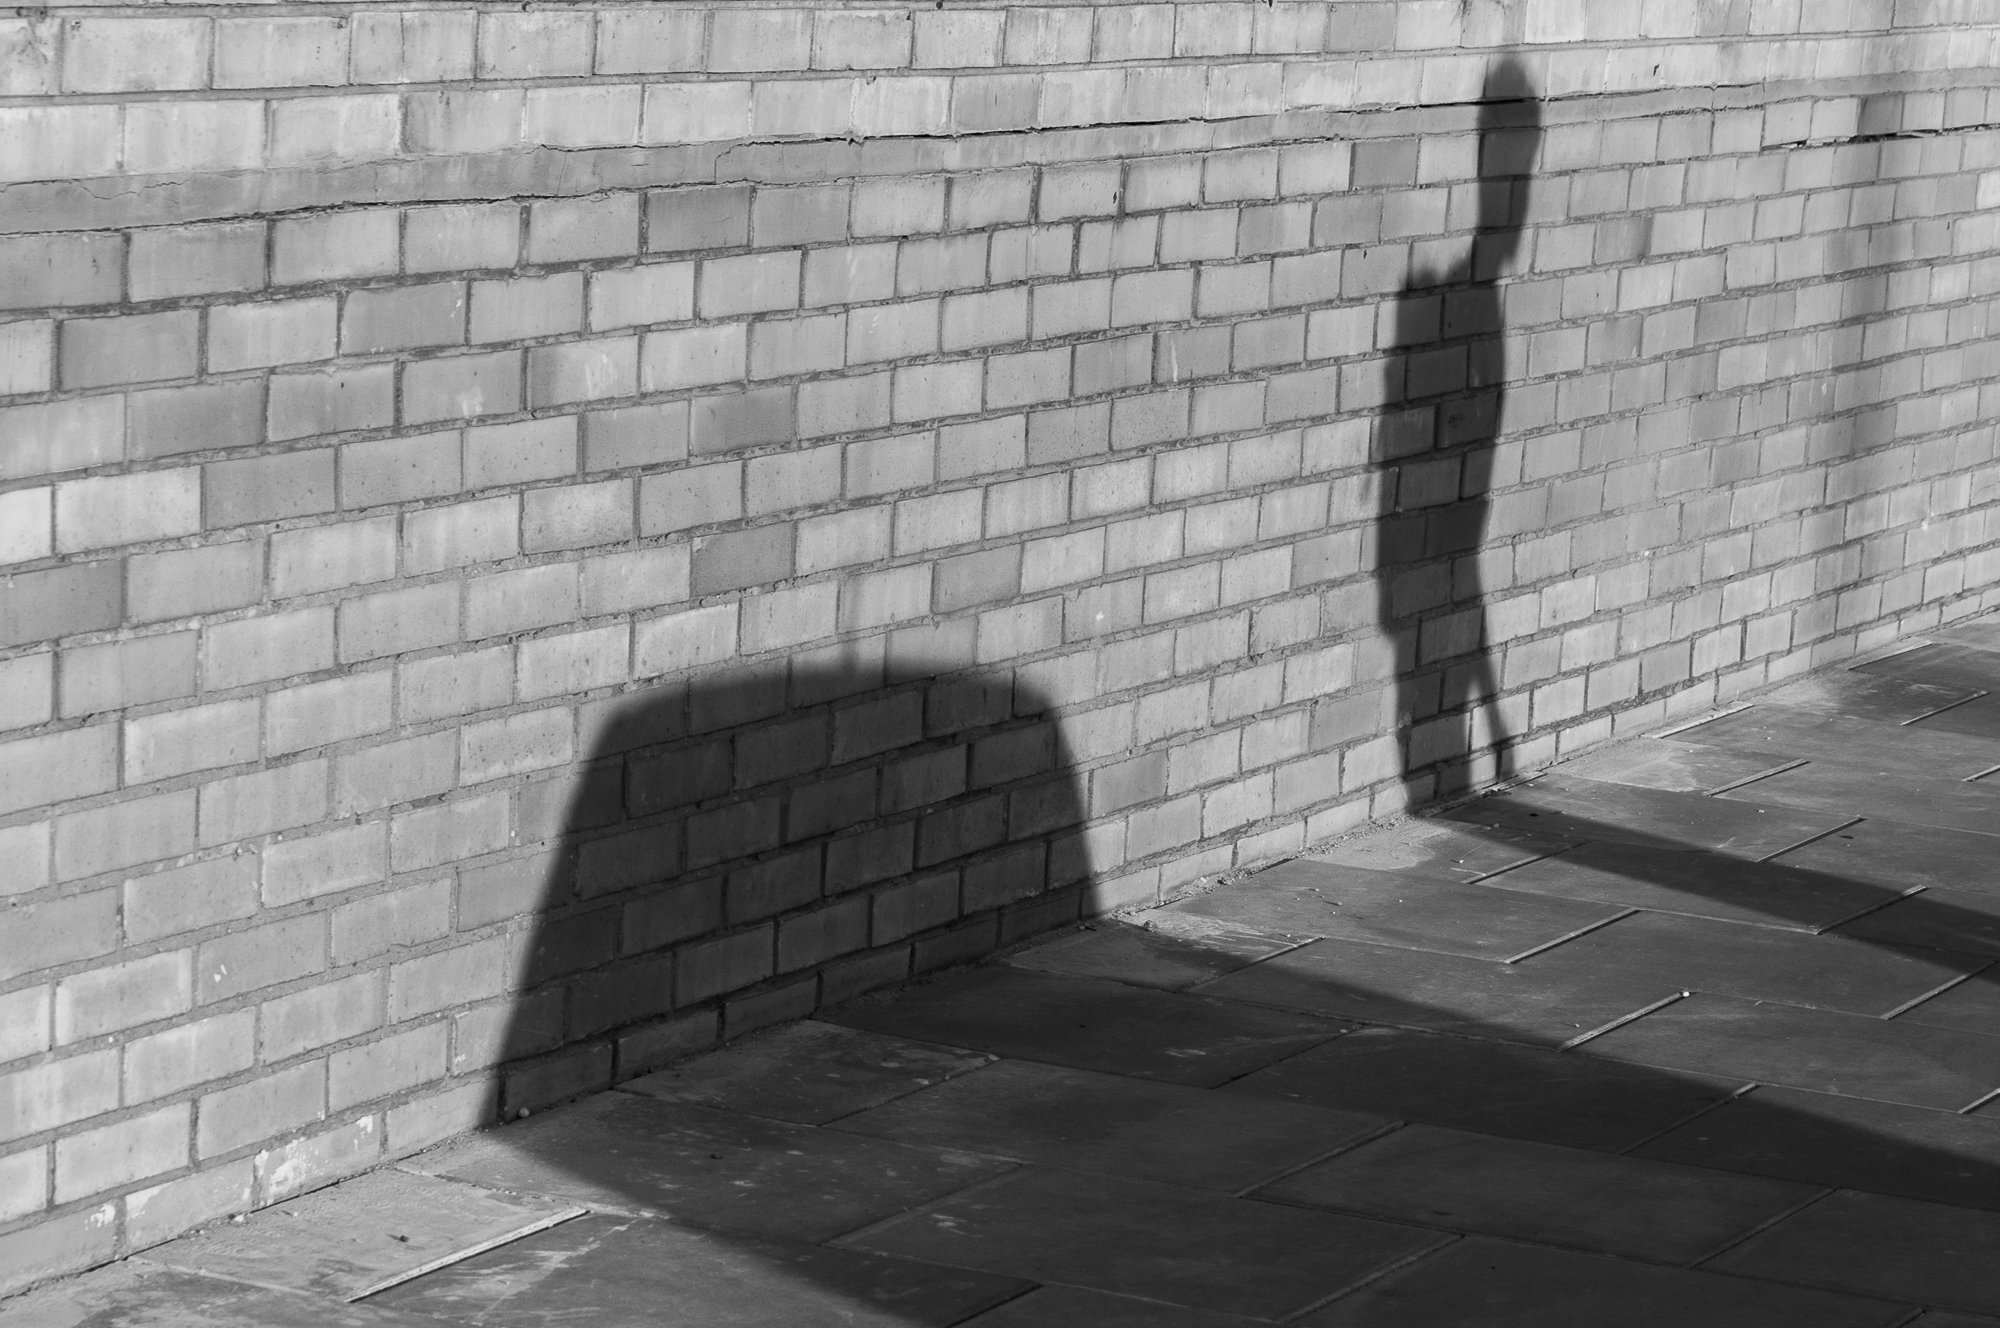 Adam Mazek Photography Warsaw (Warszawa) 2018. Post: "Civilization's self-destruction." Minimalism. Shadow. Silhouette.